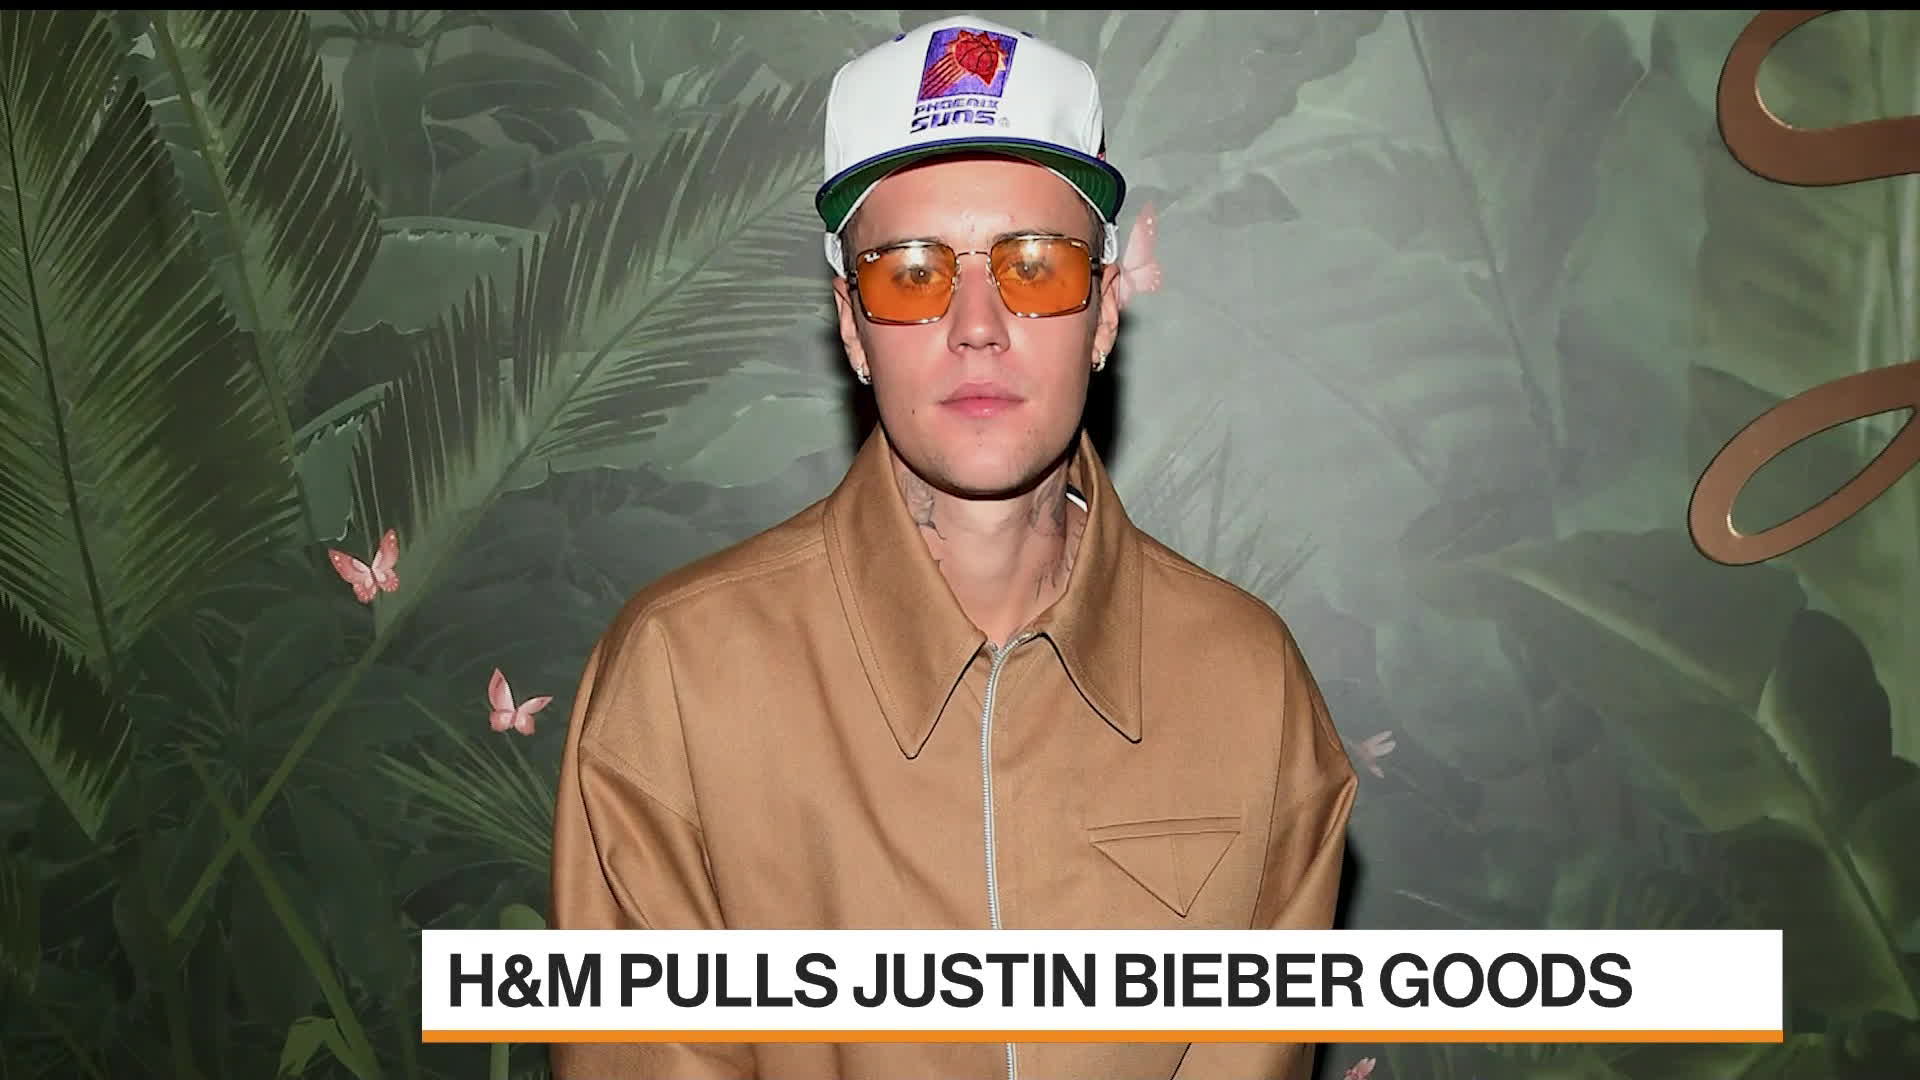 Justin Bieber collection at H&M pulled after singer complains - Wales Online